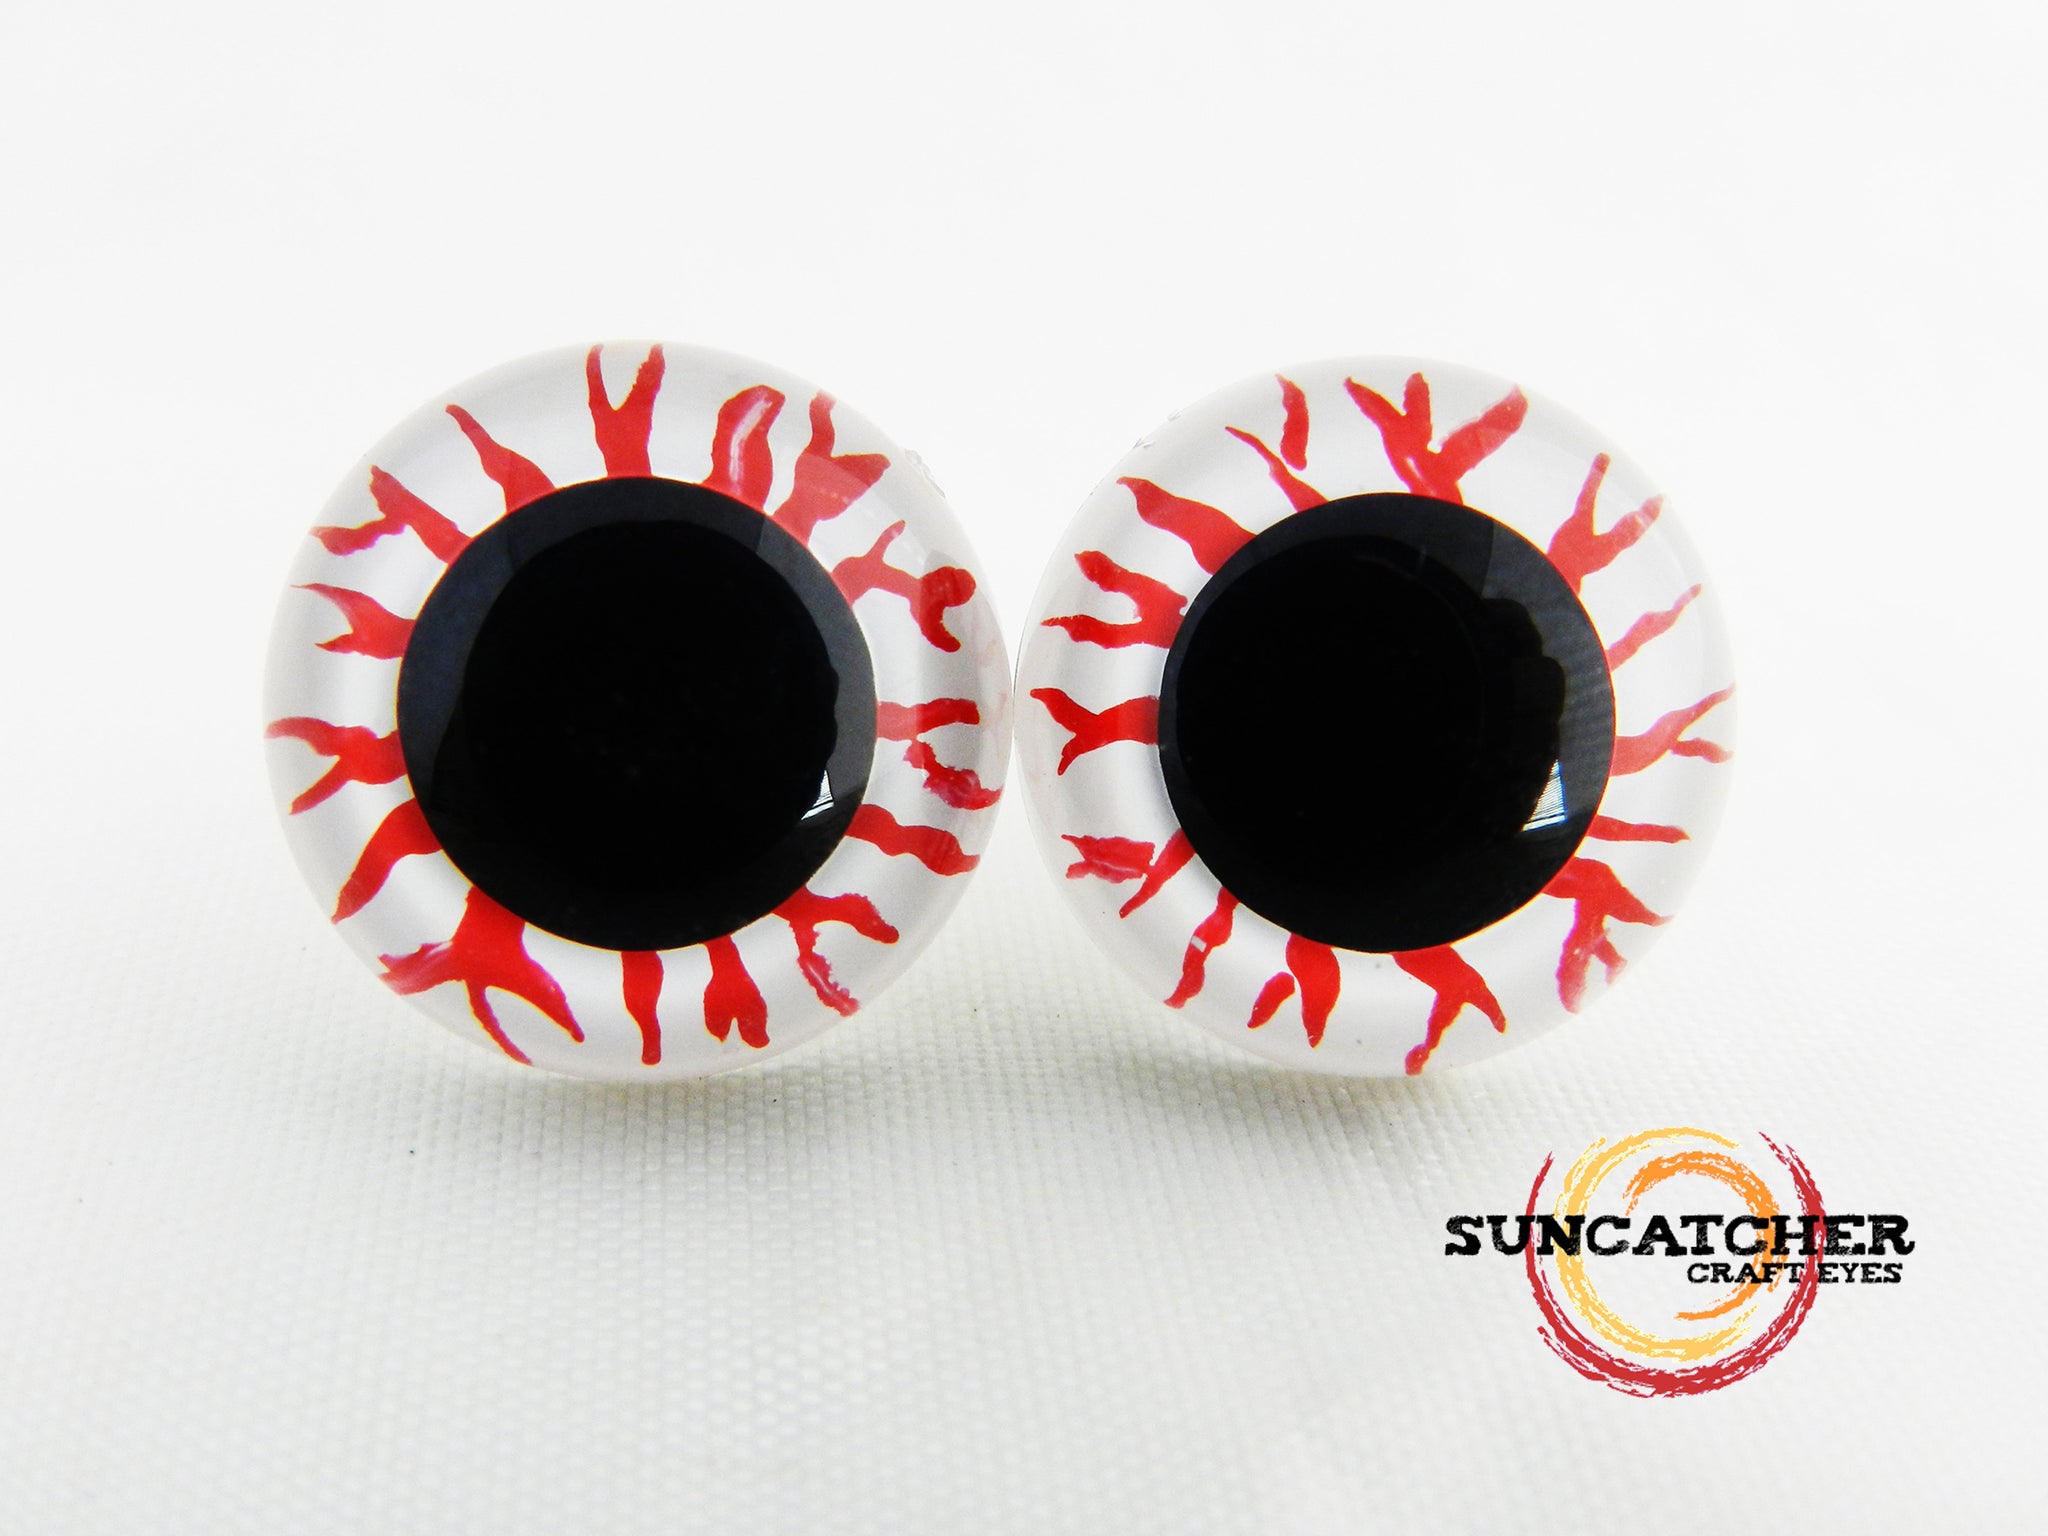 Bloodshot Craft Eyes by the Pair – Suncatcher Craft Eyes